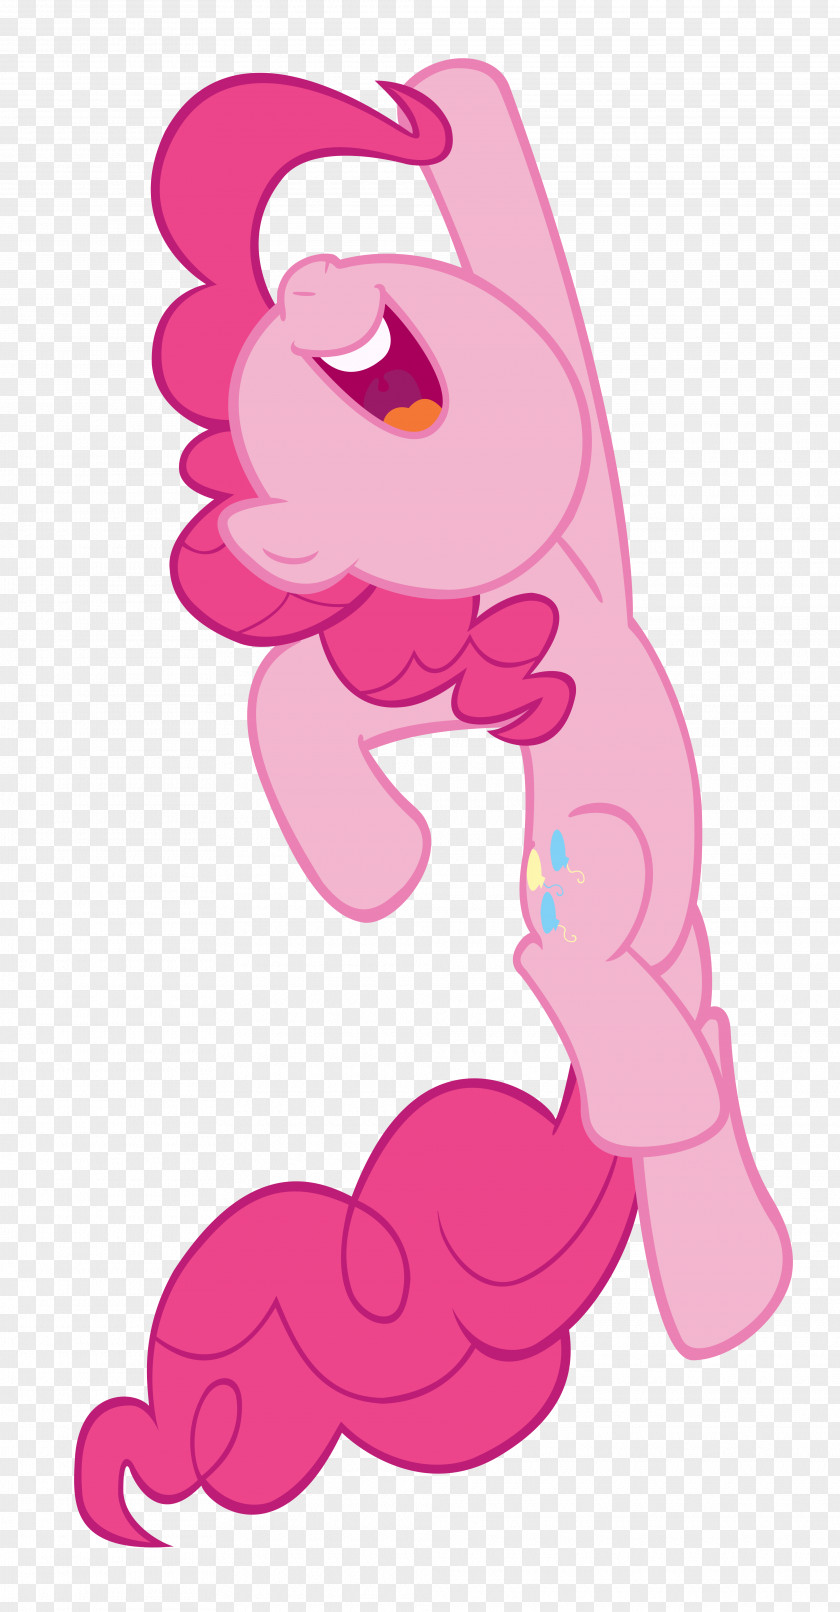 Mustache Vector Pinkie Pie My Little Pony: Friendship Is Magic Fandom Equestria Girls PNG